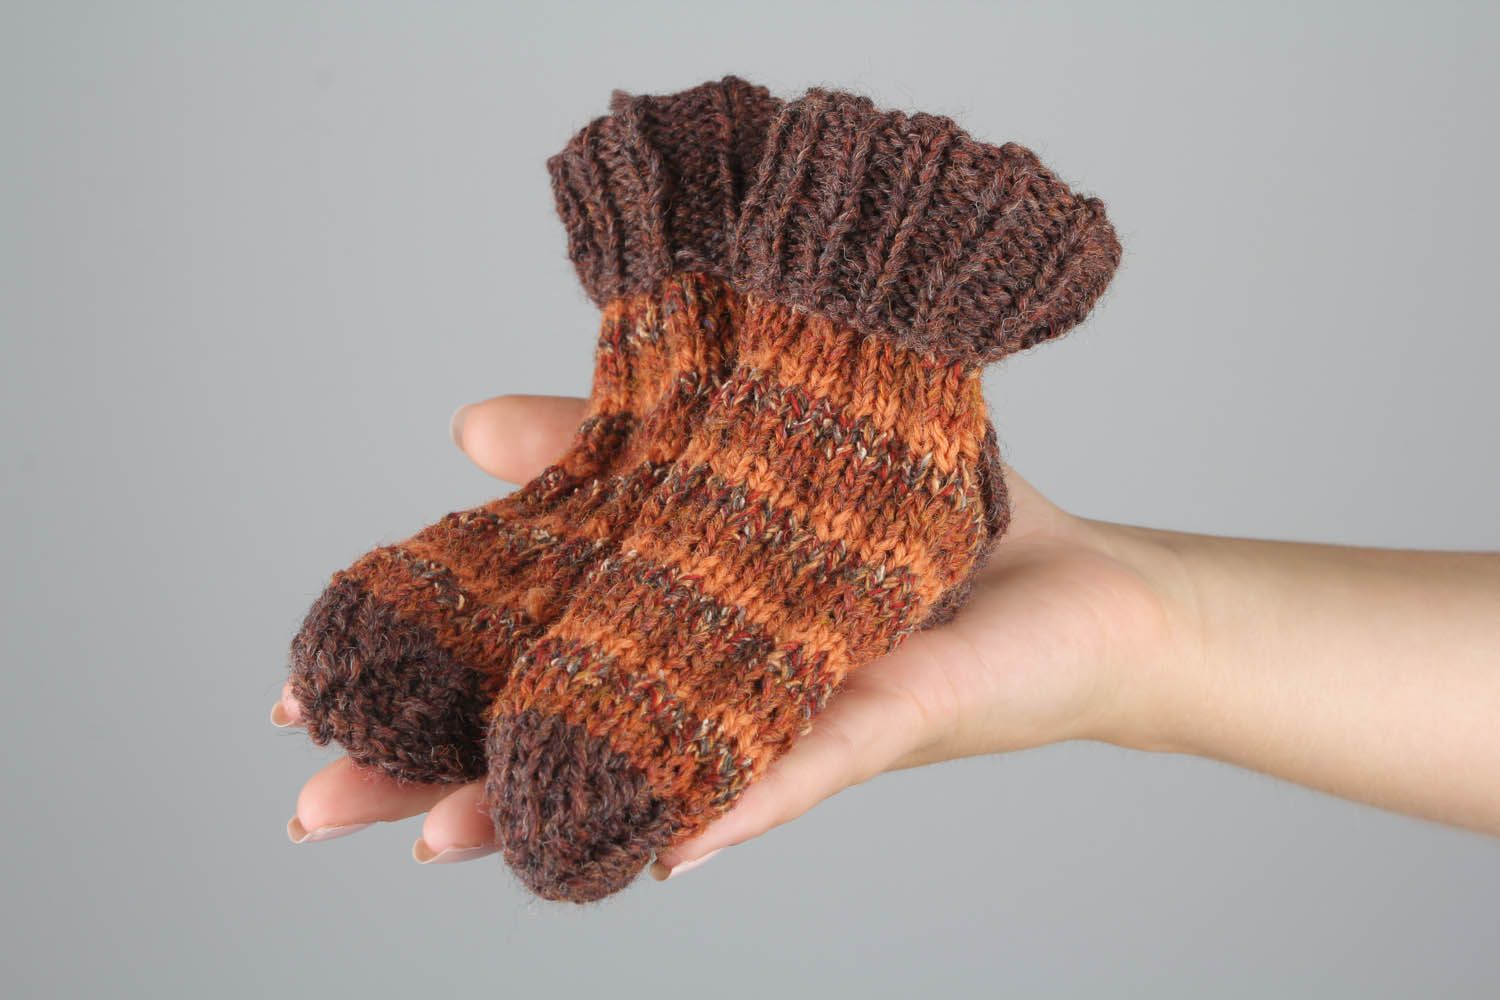 Knitted socks photo 4